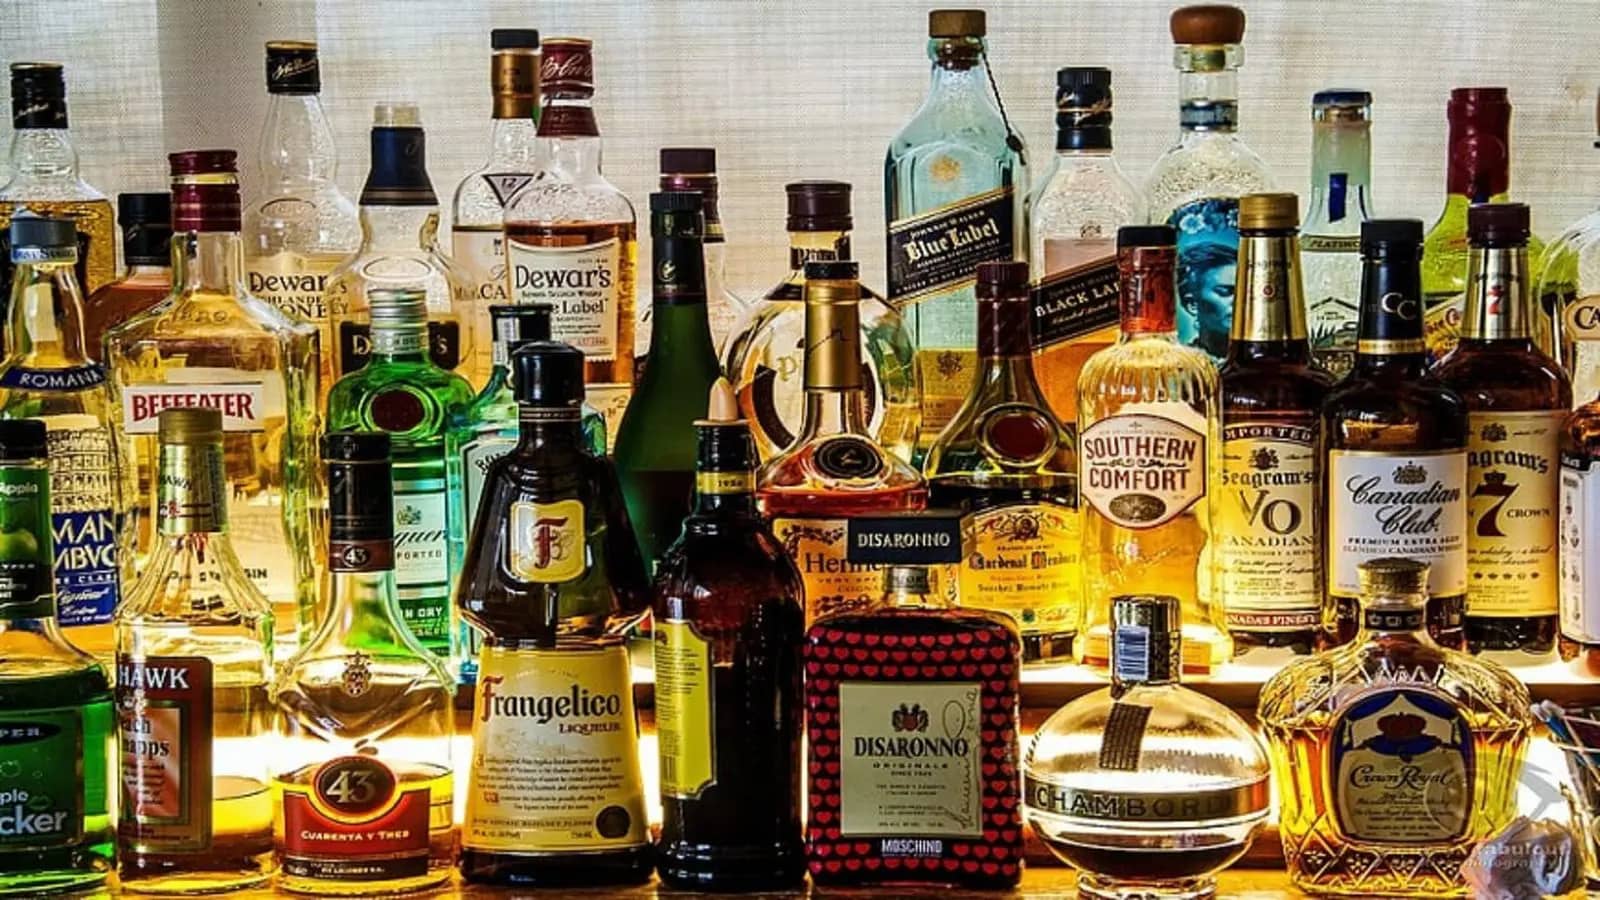 United Spirit divests 32 brands to Inbrew Beverages to reinforce profitability in India